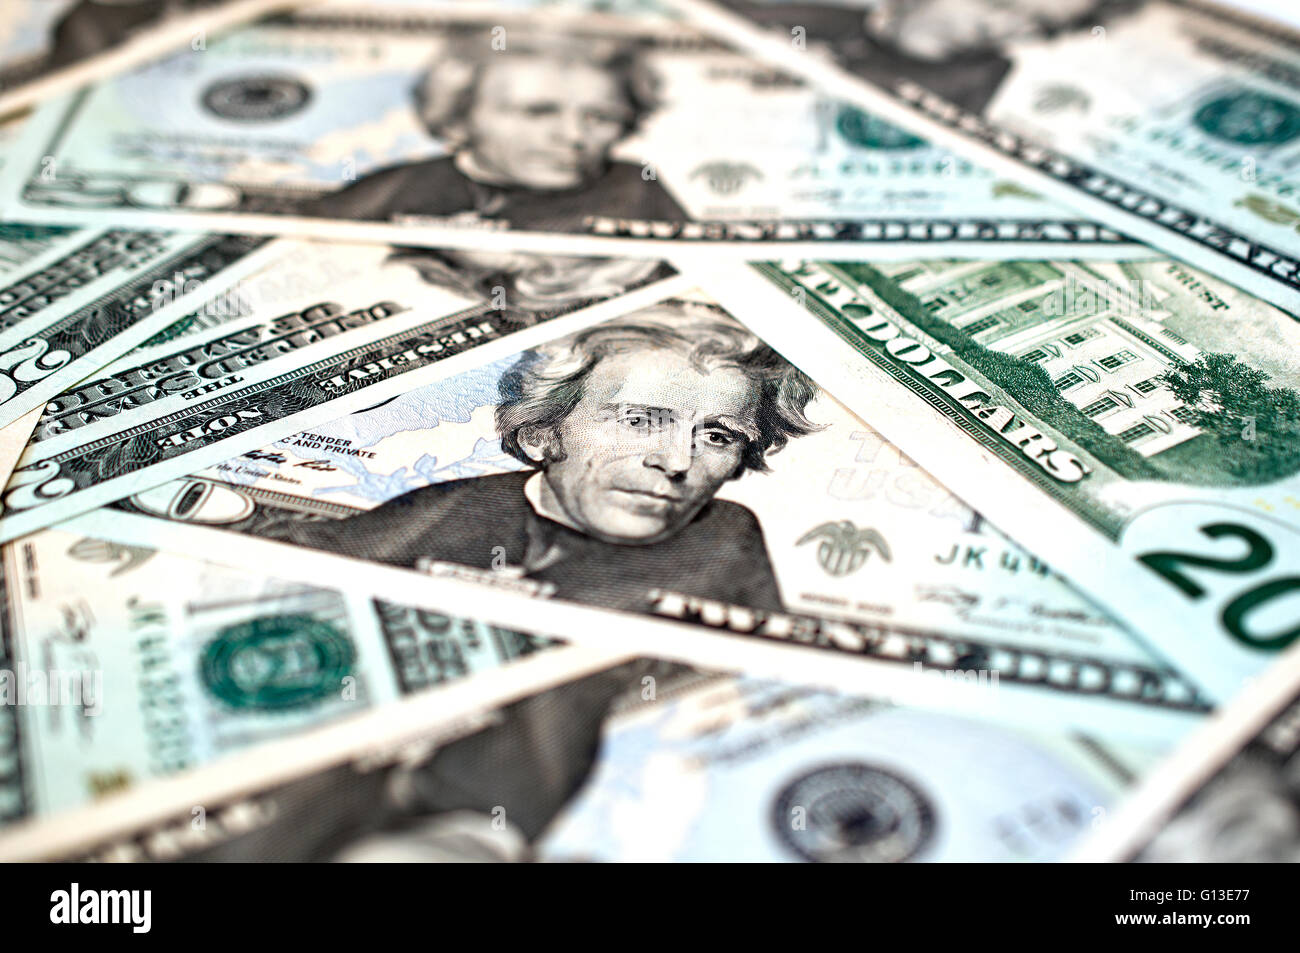 US Dollars - macro image focusing on Andrew Jacksons face Stock Photo